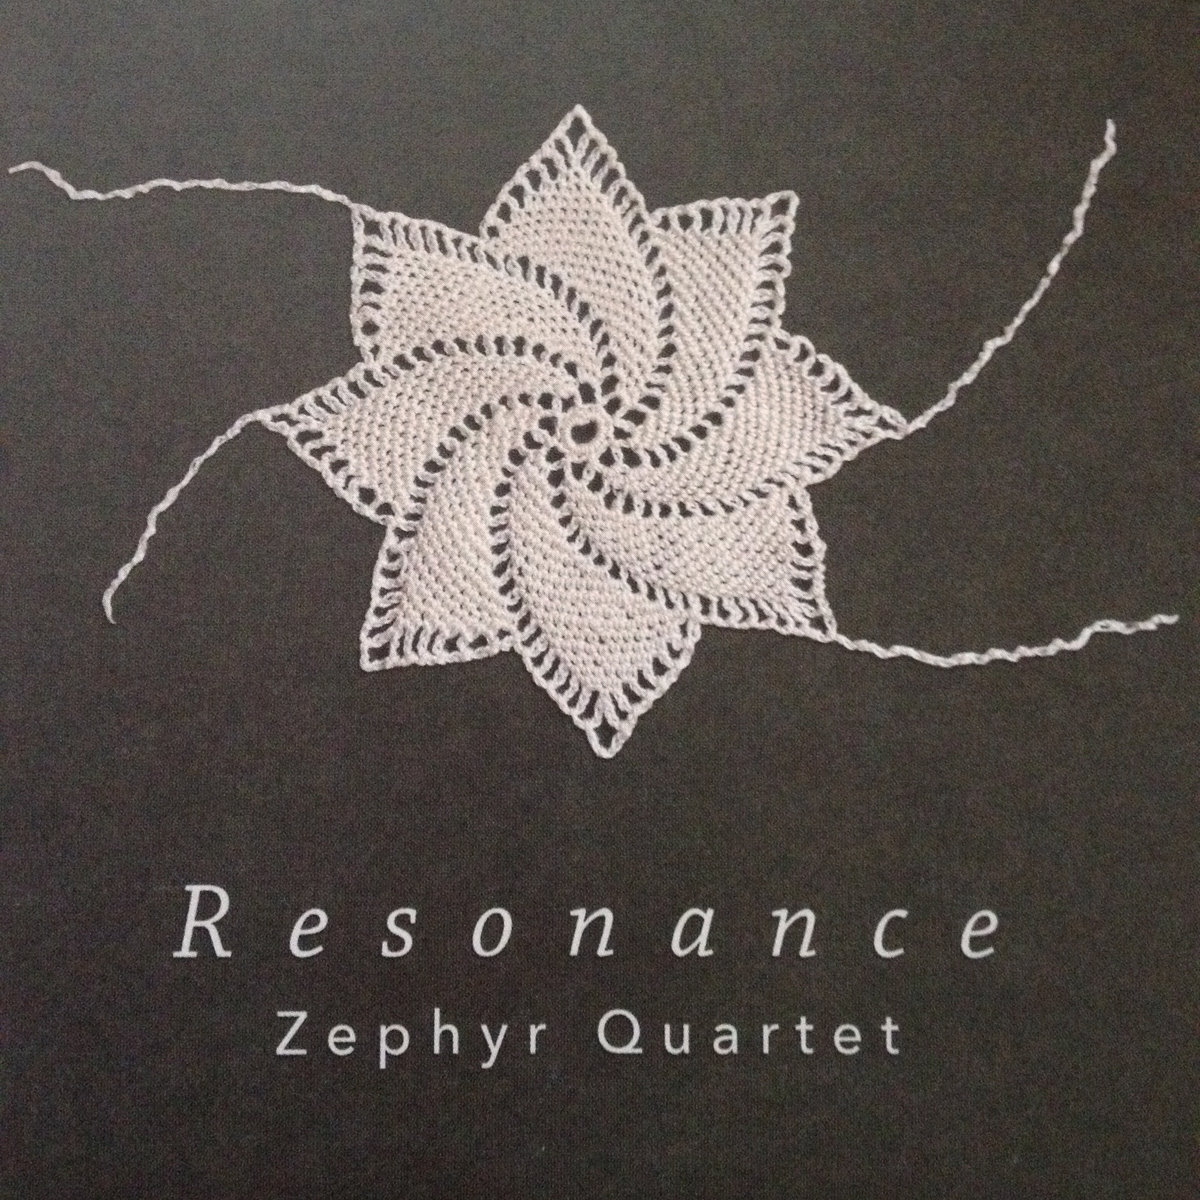 Zephyr Quartet - "Resonance" [Recorded, Mixed & Mastered (JP)]